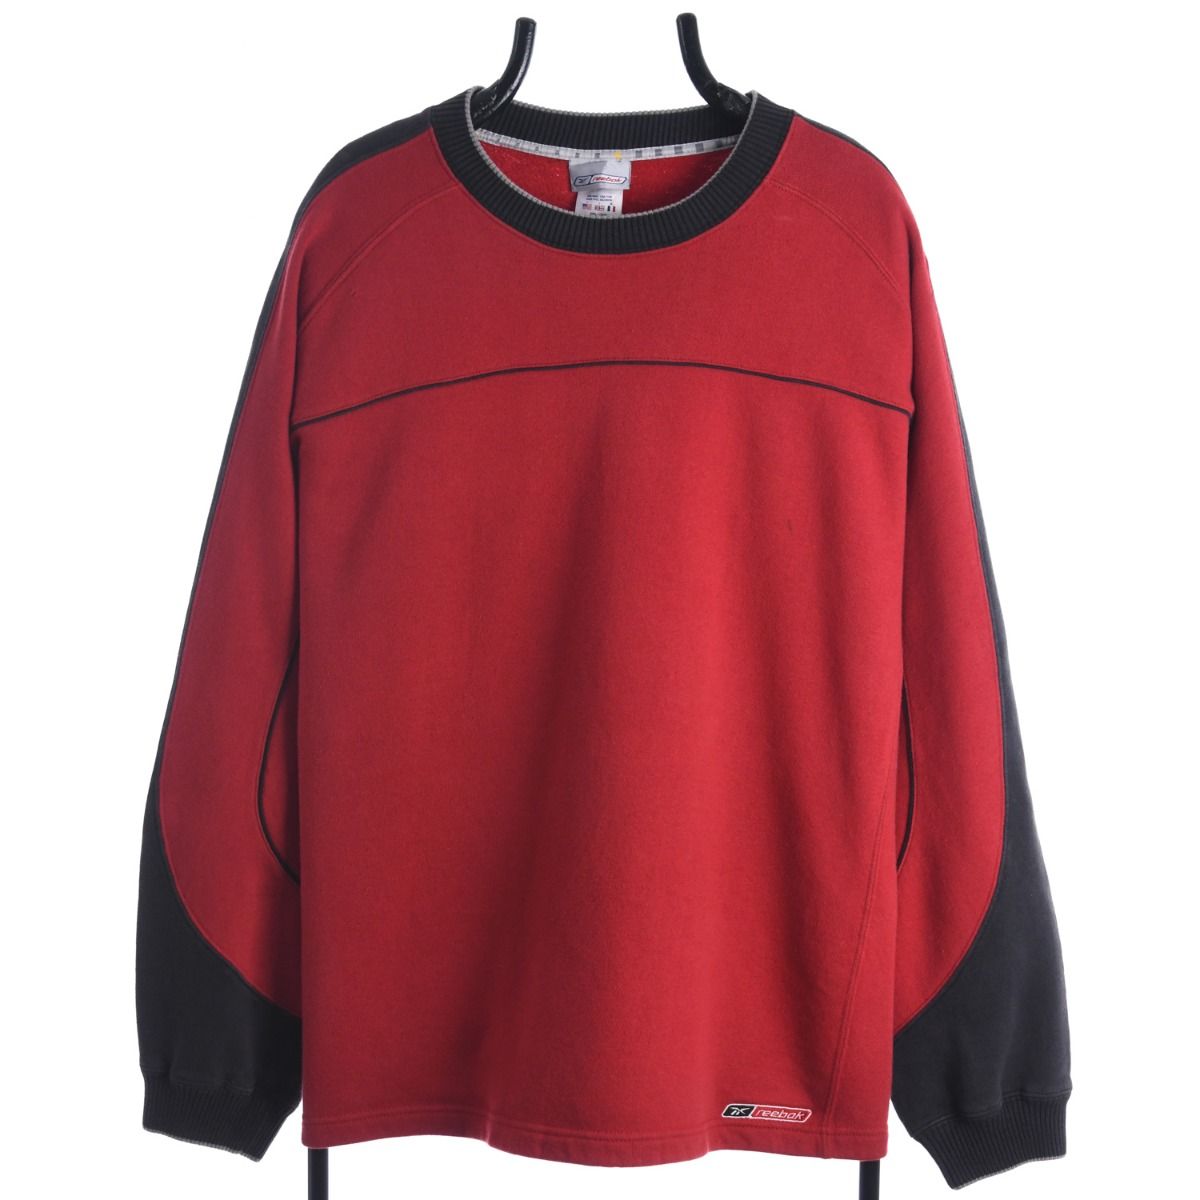 Reebok 2000s Red Black Sweatshirt